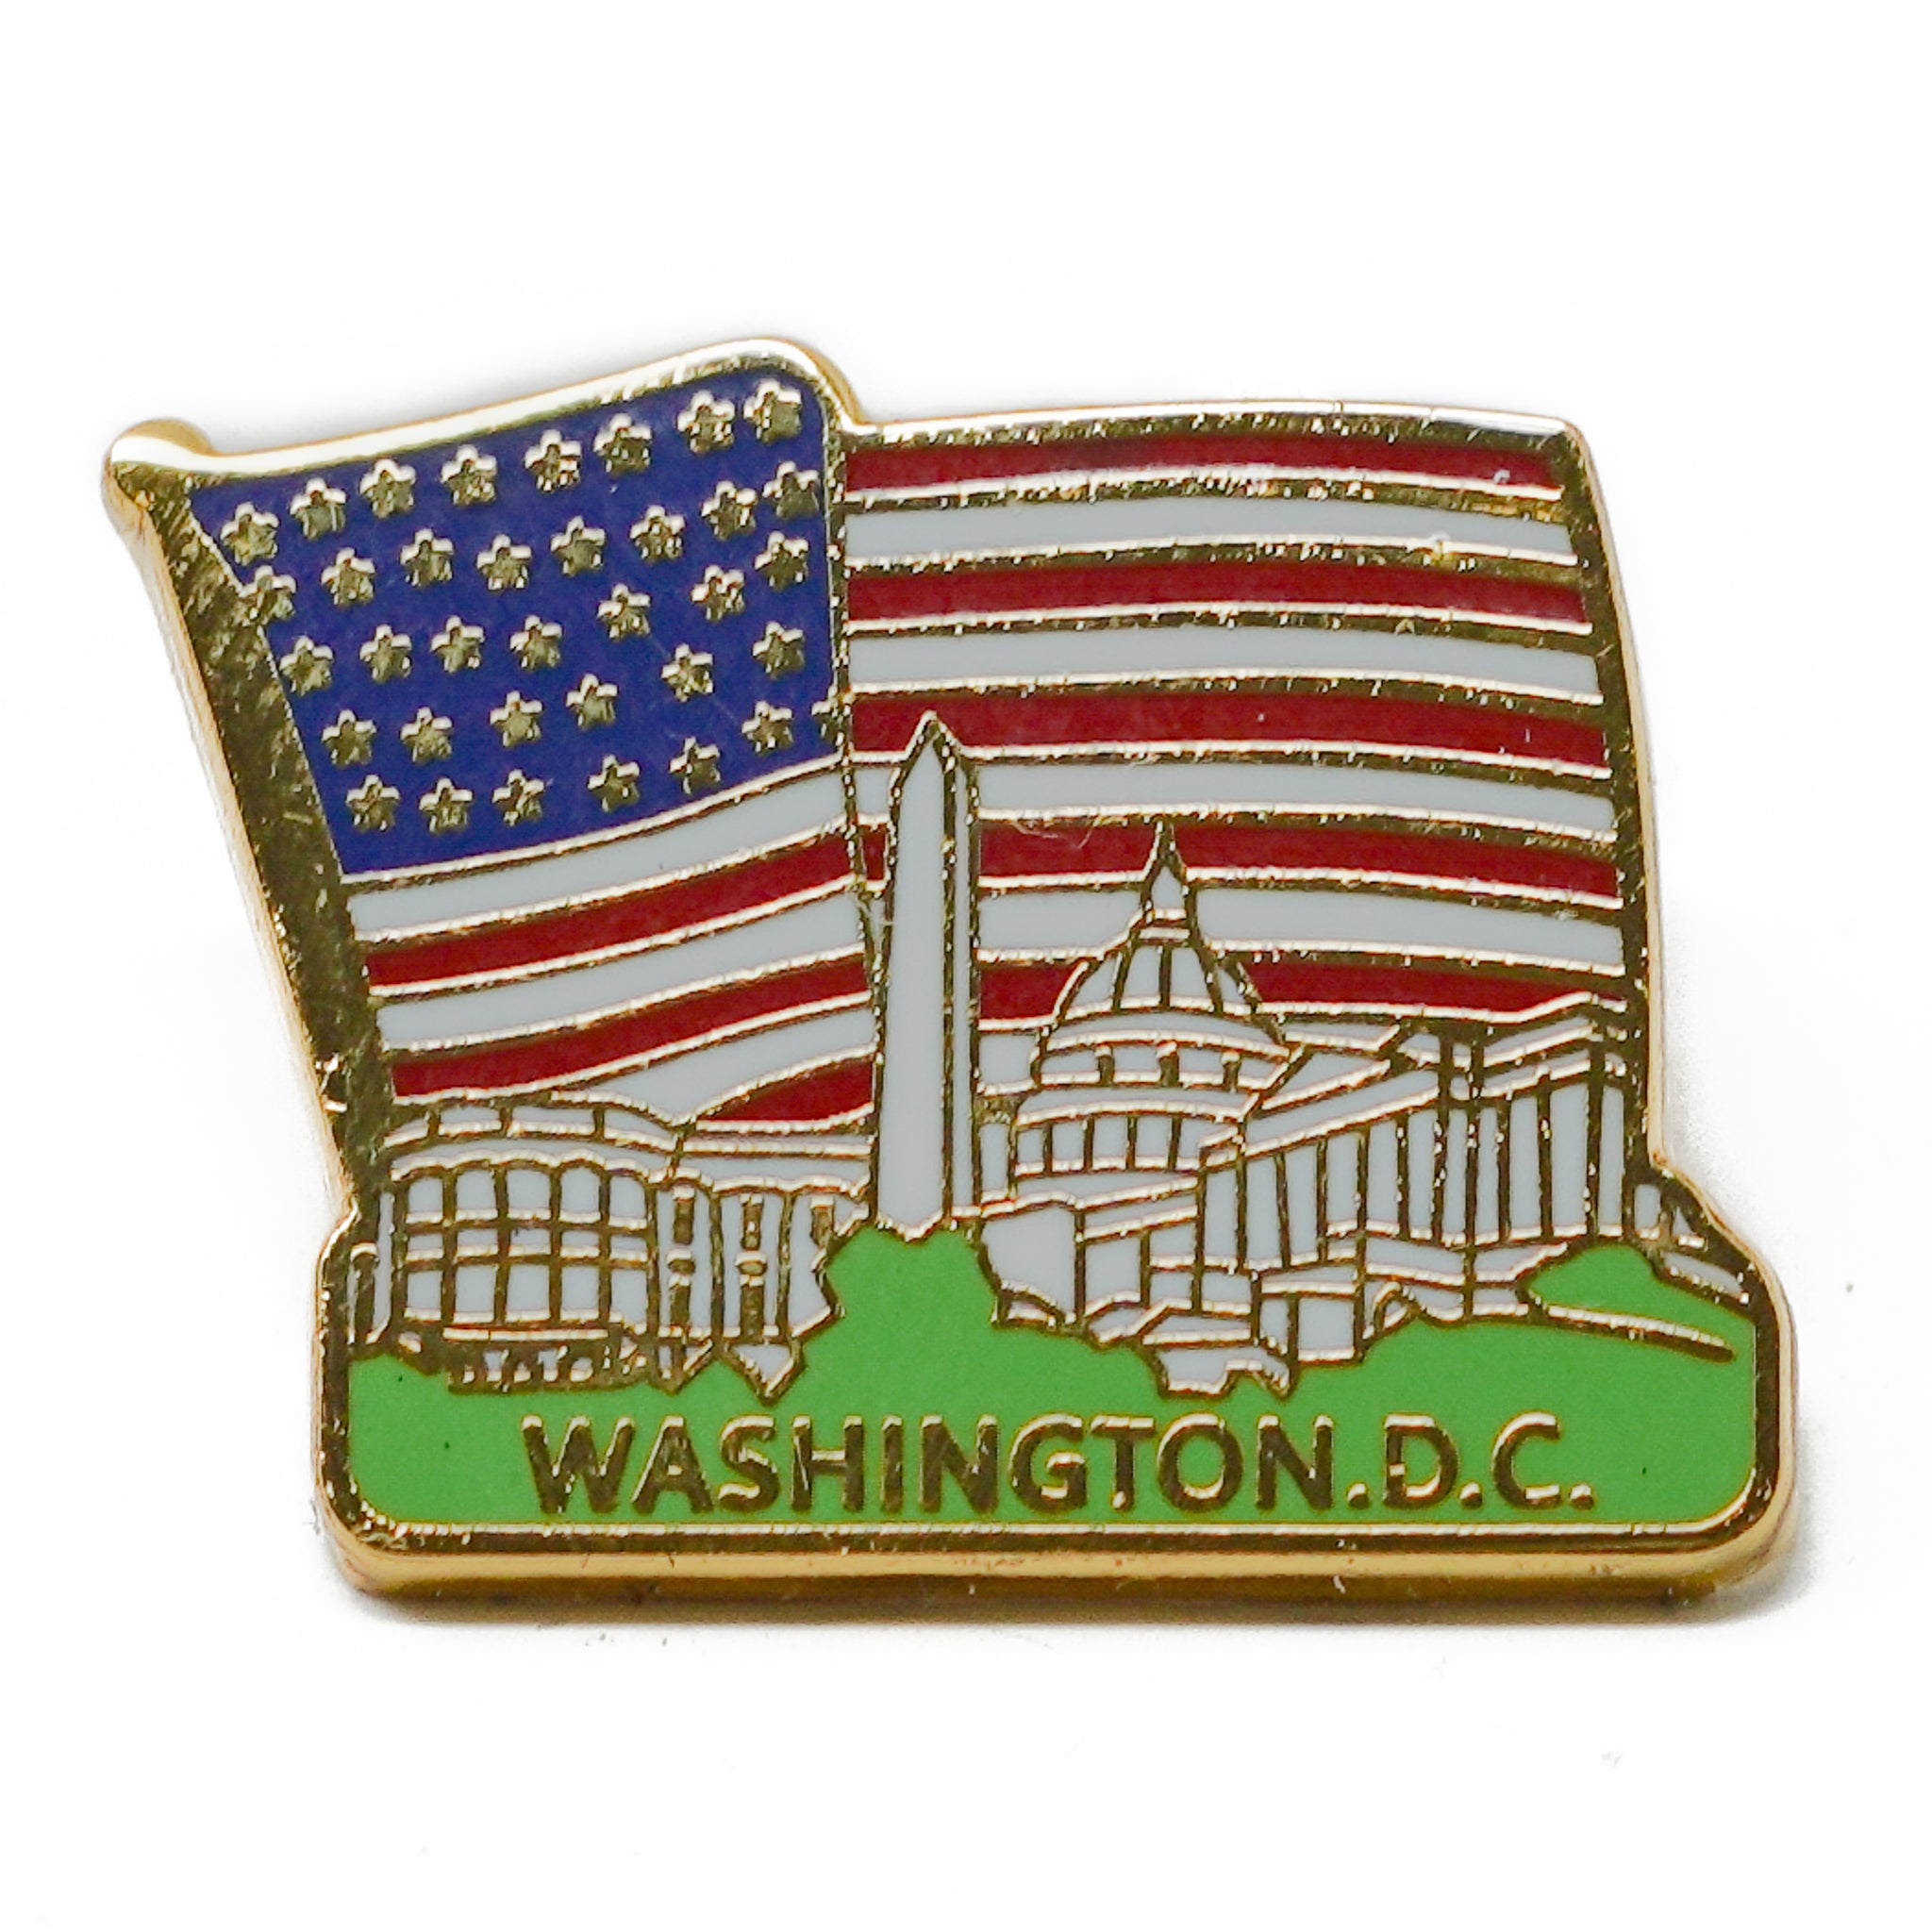 Washington DC Monument and American Flag Lapel Pin